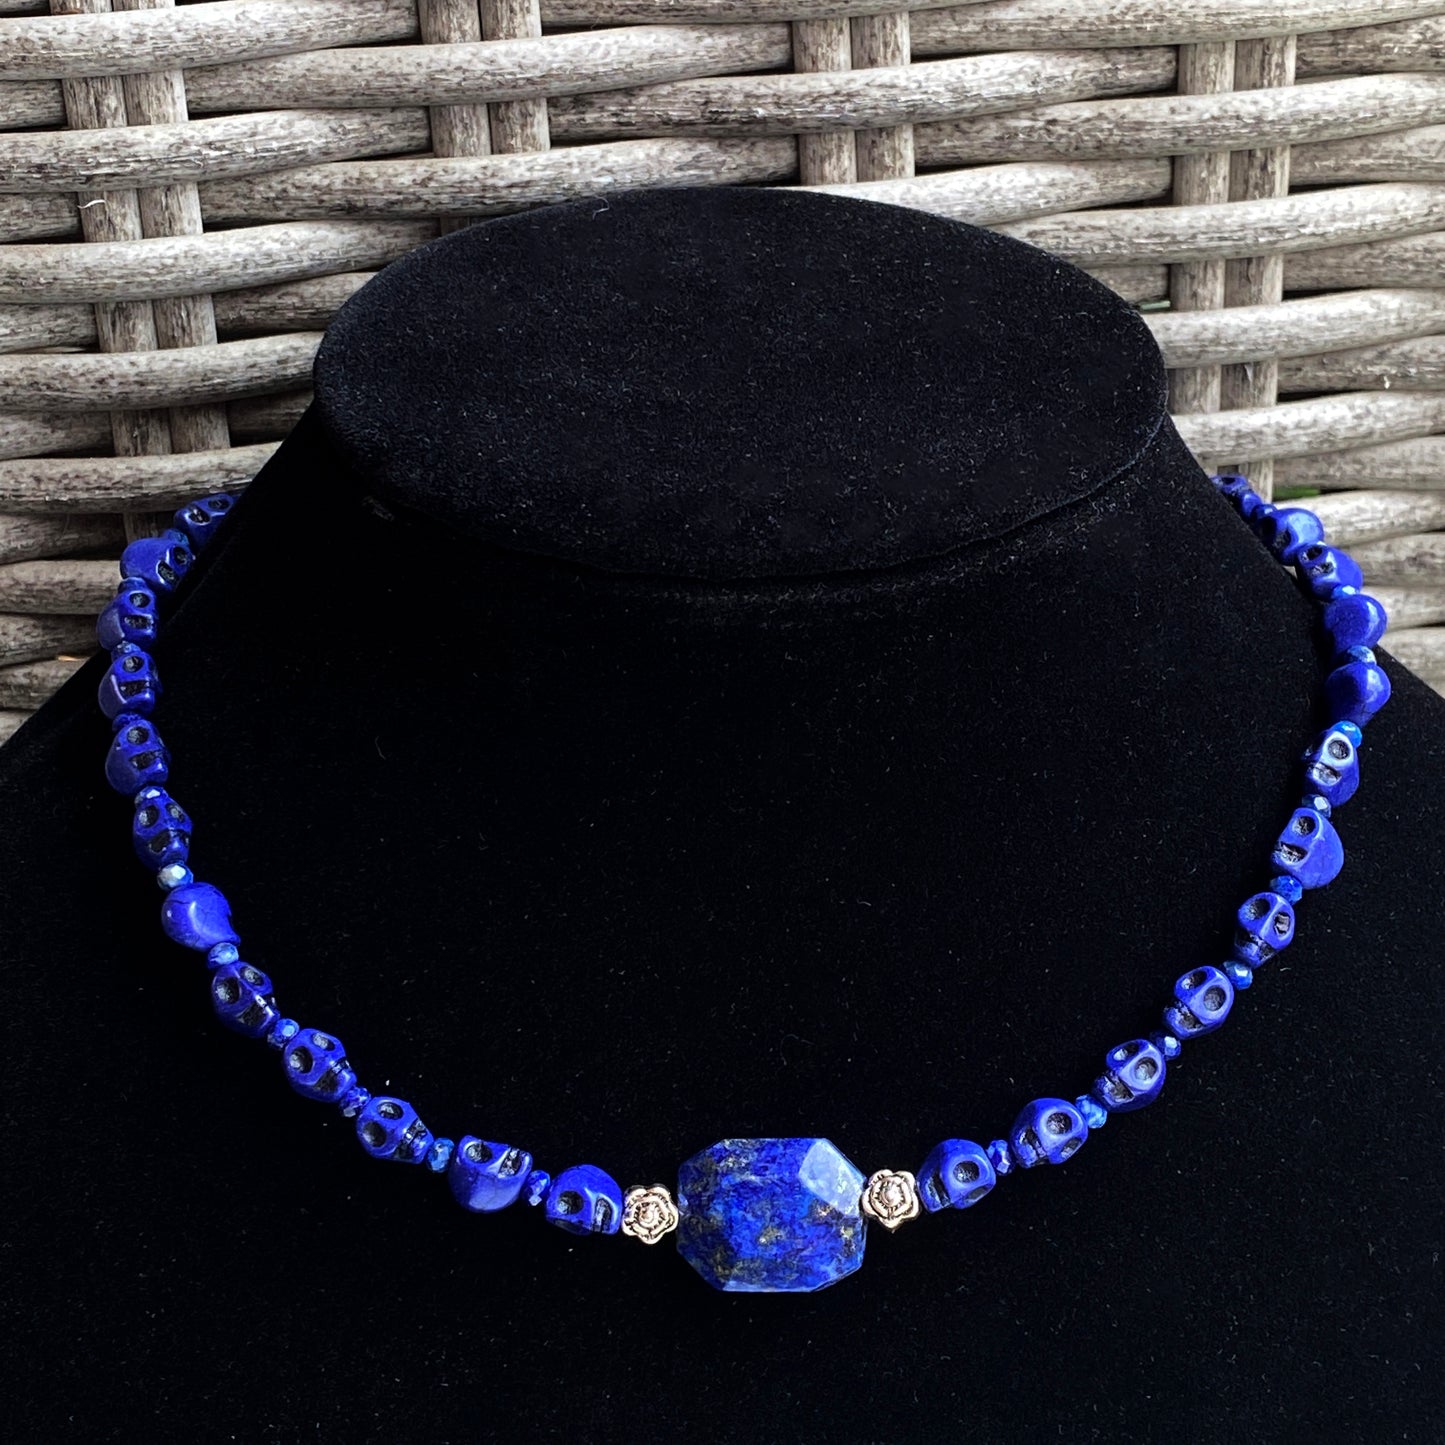 Lapis Lazuli and Howlite Skull Choker Necklace